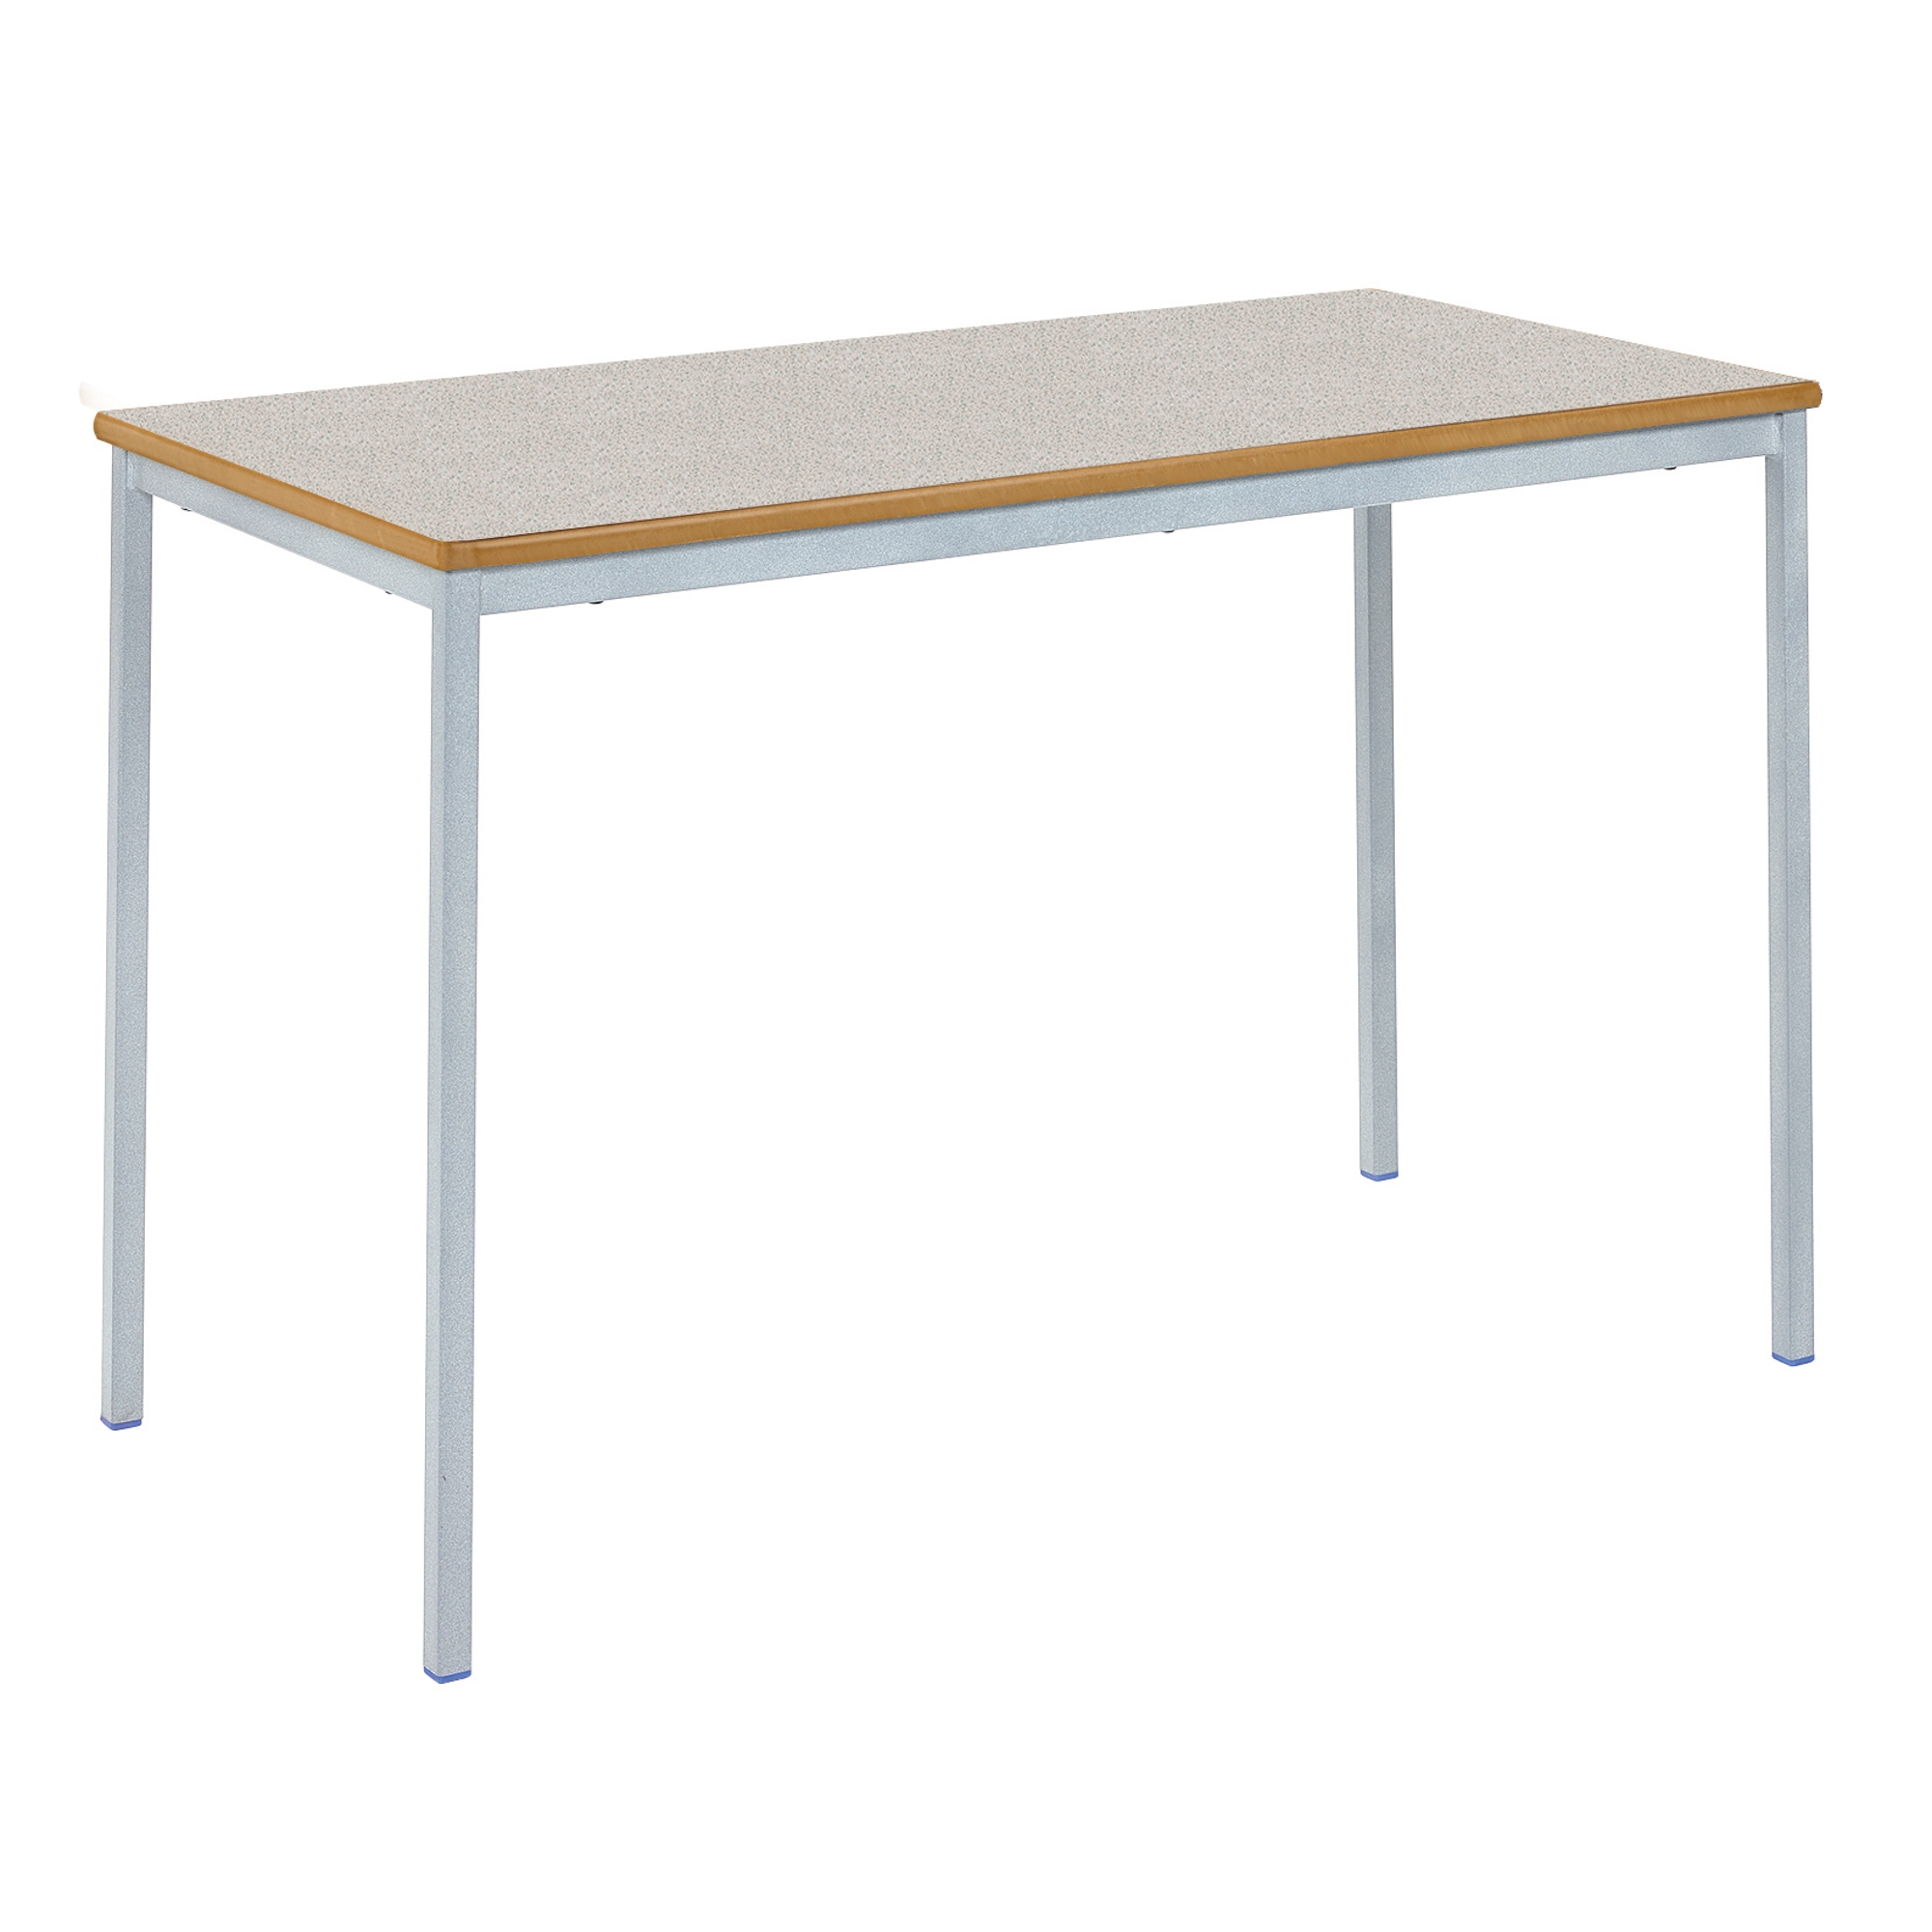 Classmates Rectangular Fully Welded Classroom Table - 1100 x 550 x 590mm - Ailsa